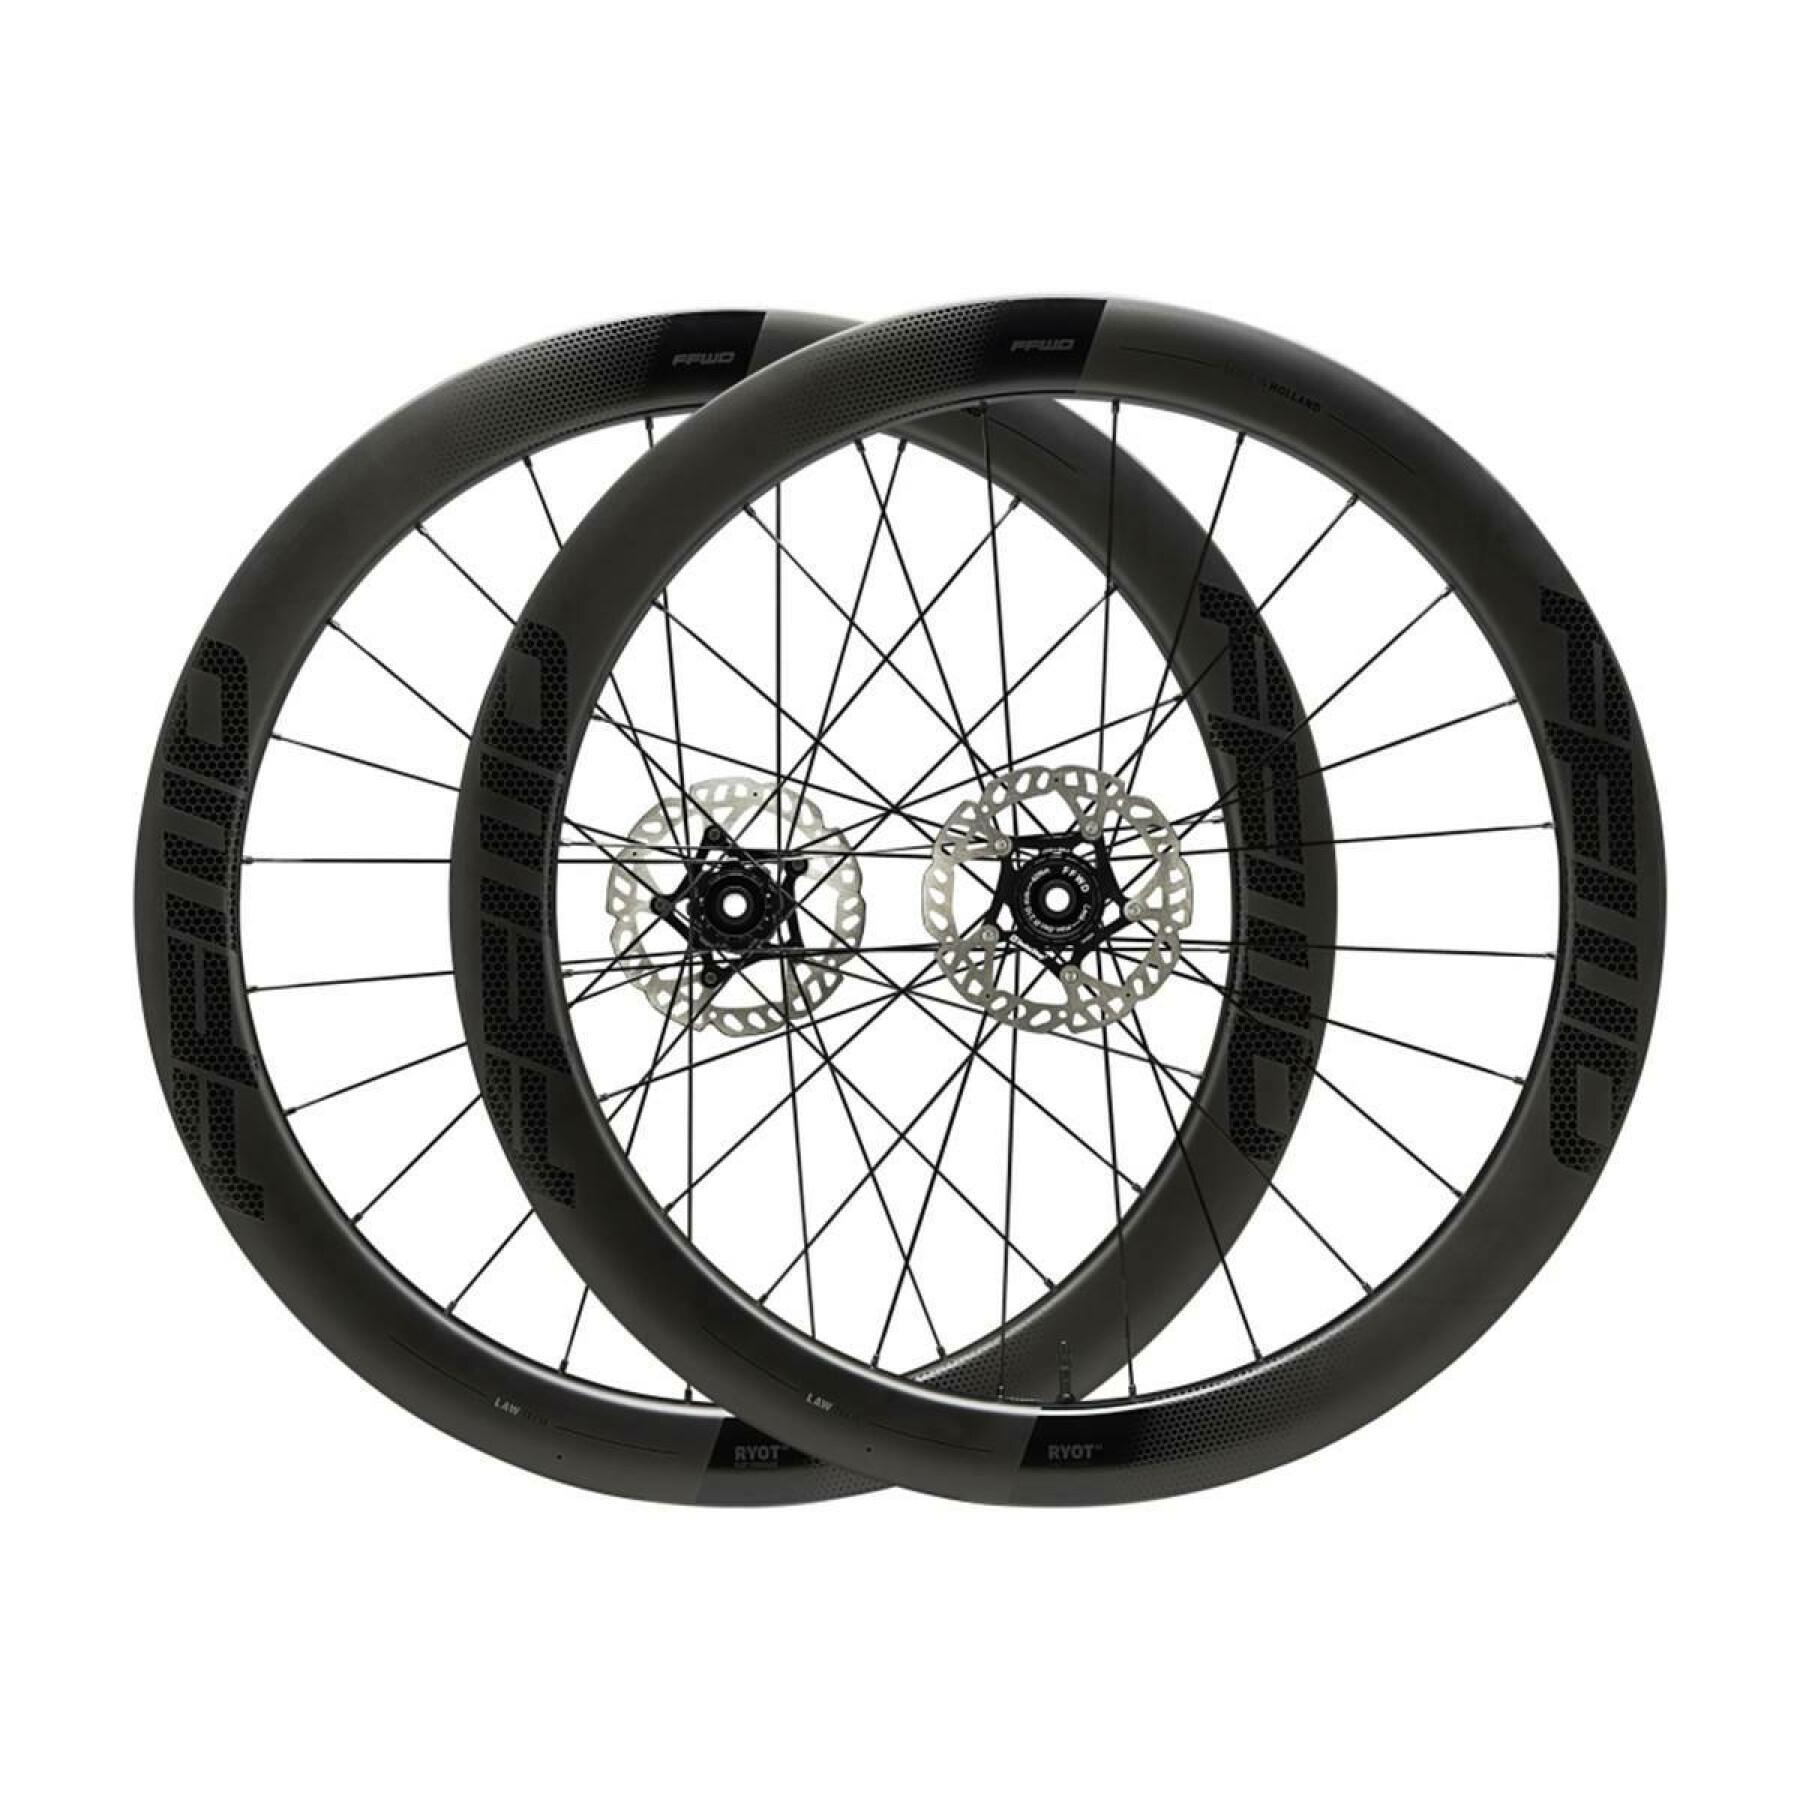 Bike wheel Fast Forward Ryot55 Wheelset Dt240 Shimano